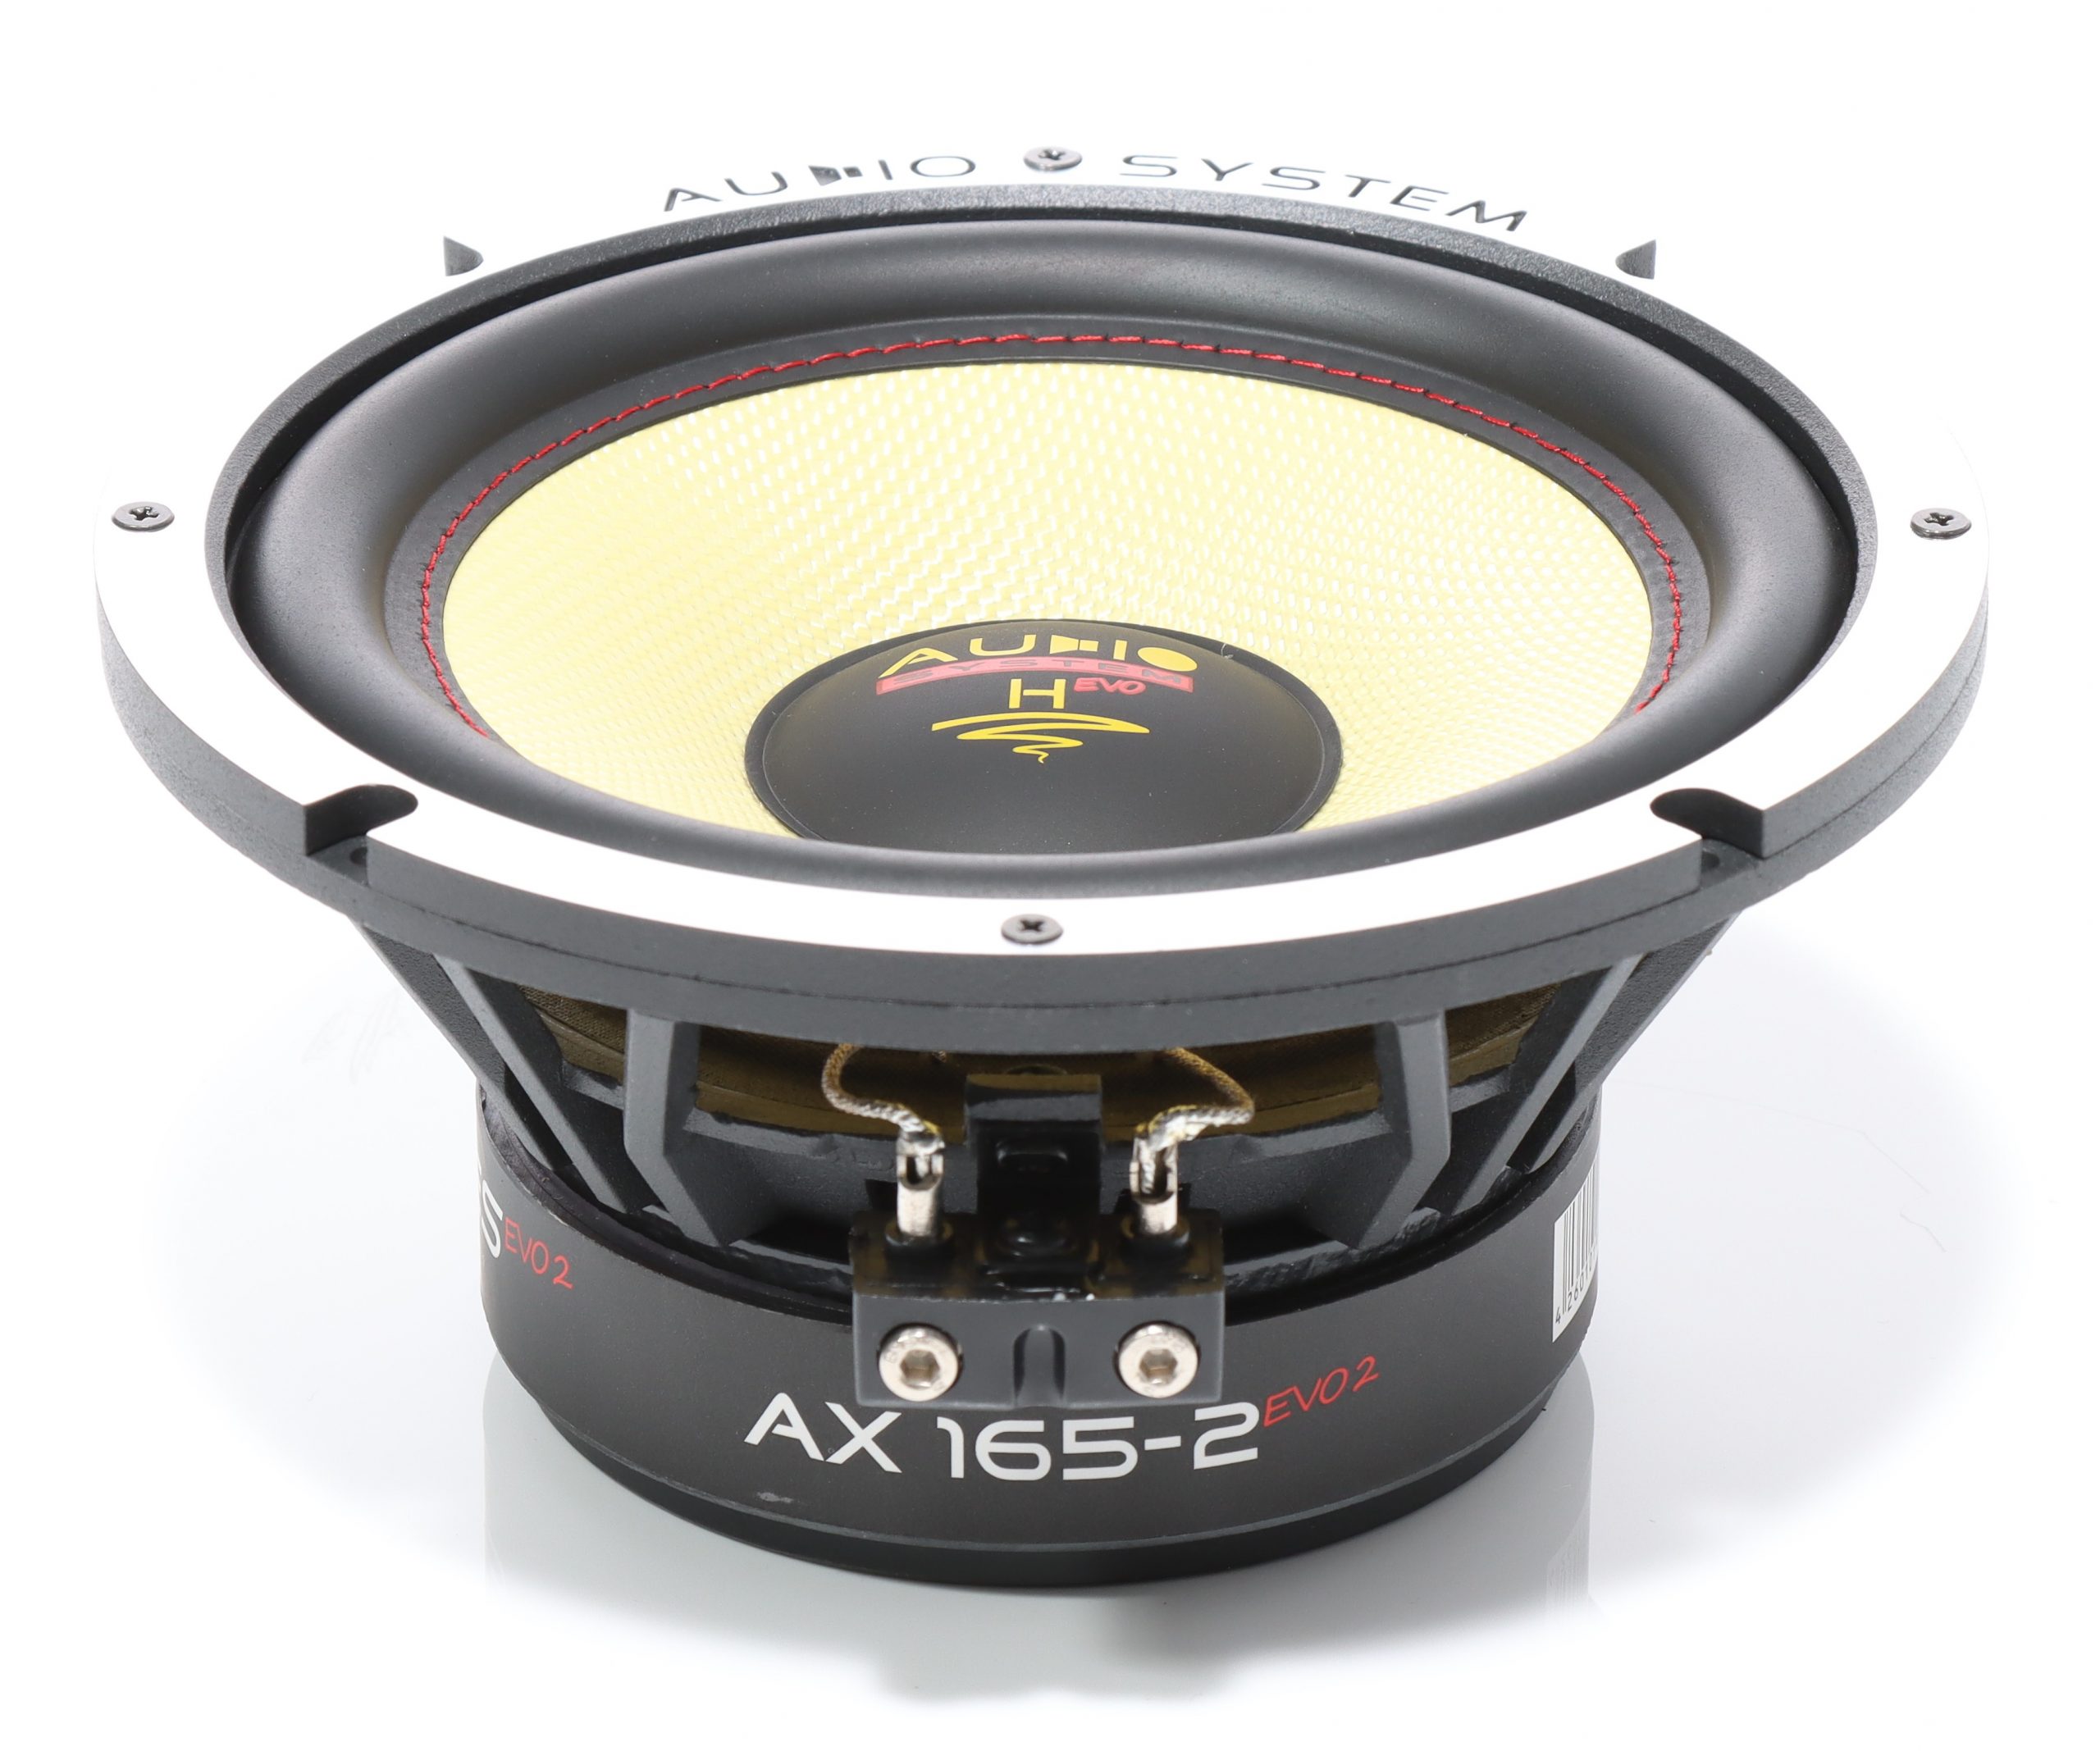 Audio System AX 165-2 EVO 2 Mitteltöner 16,5 cm (6.5") Kickbass Auto Lautsprecher Tieftöner 220 Watt - 1 Paar 